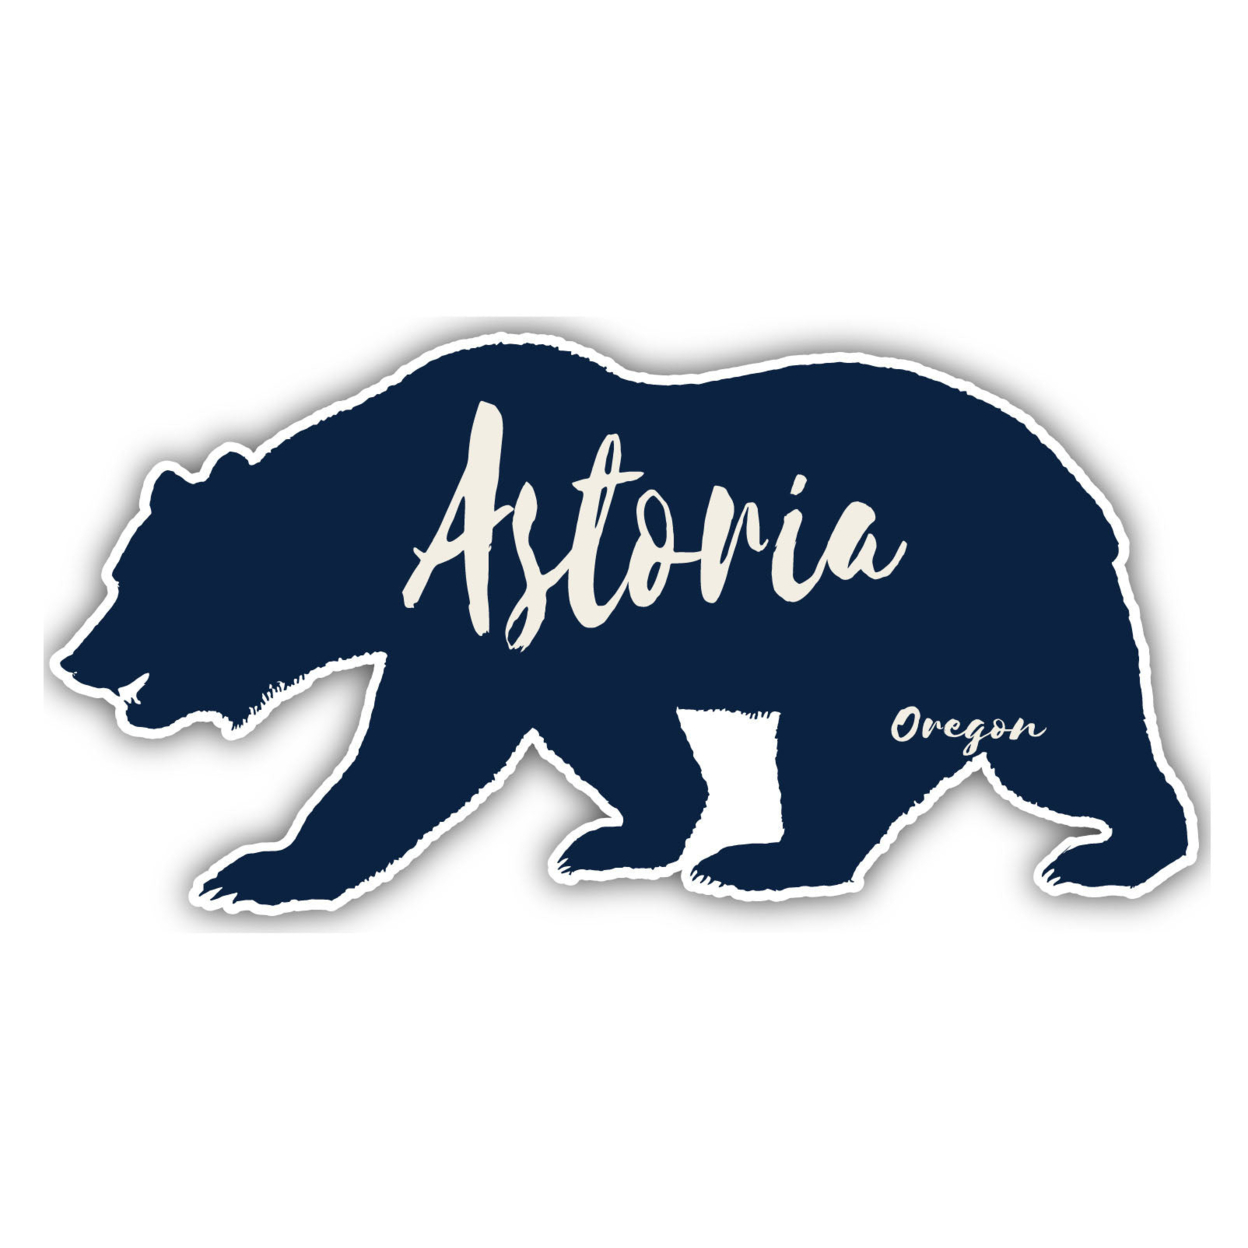 Astoria Oregon Souvenir Decorative Stickers (Choose Theme And Size) - 4-Pack, 6-Inch, Bear